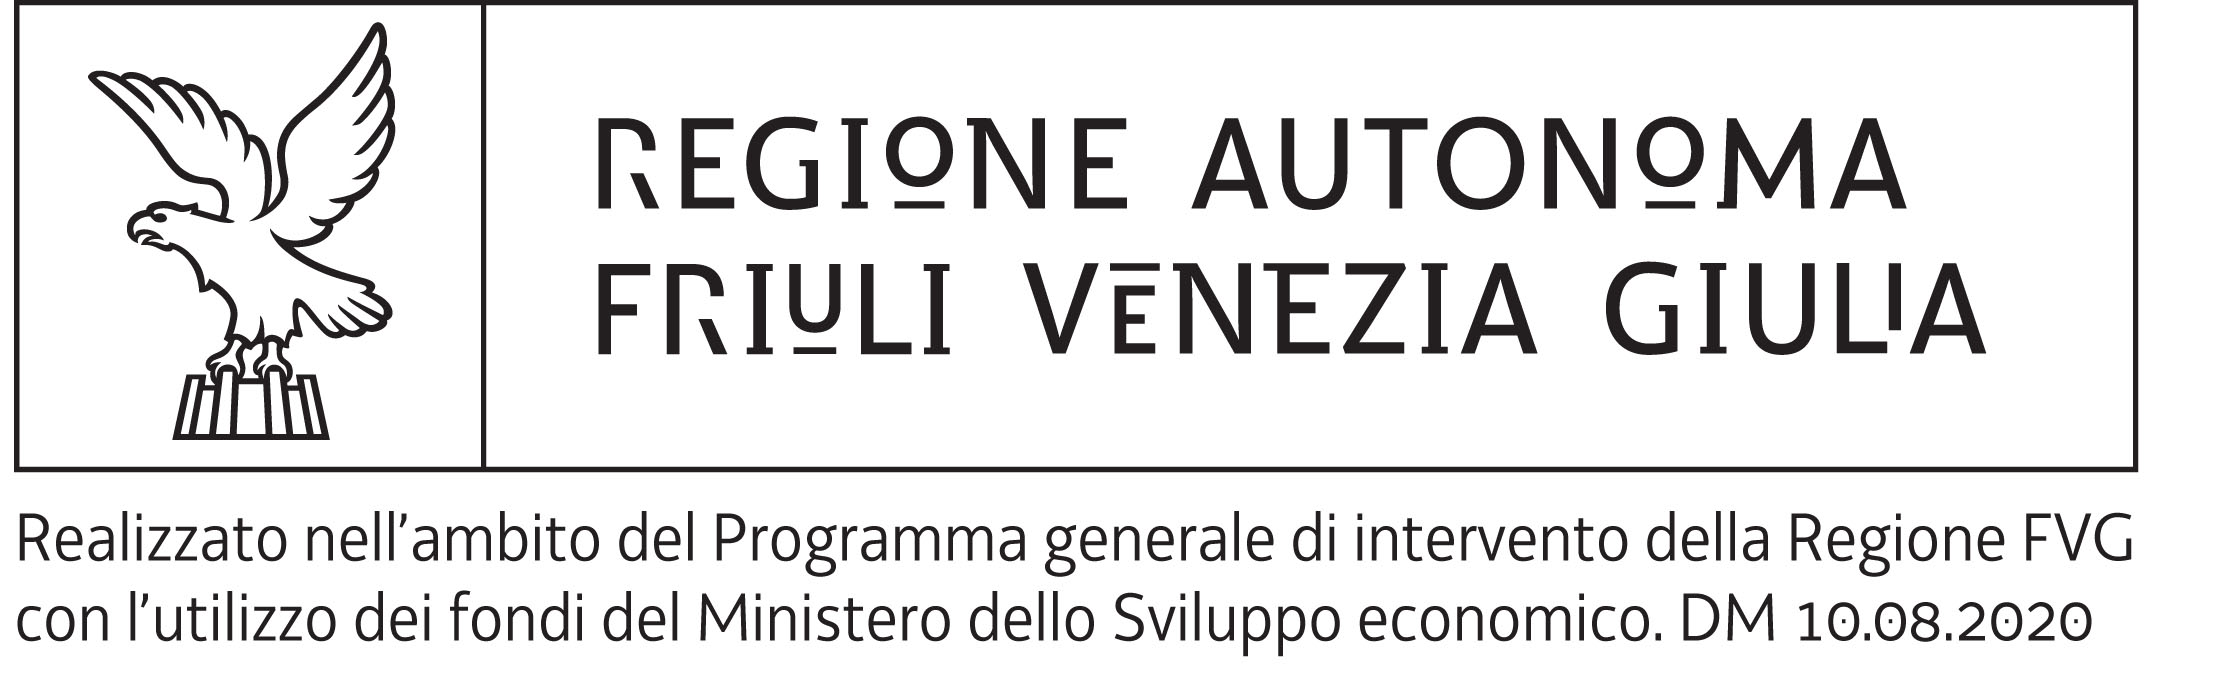 Regione Autonoma Friuli Venezia Giulia. MAP 9